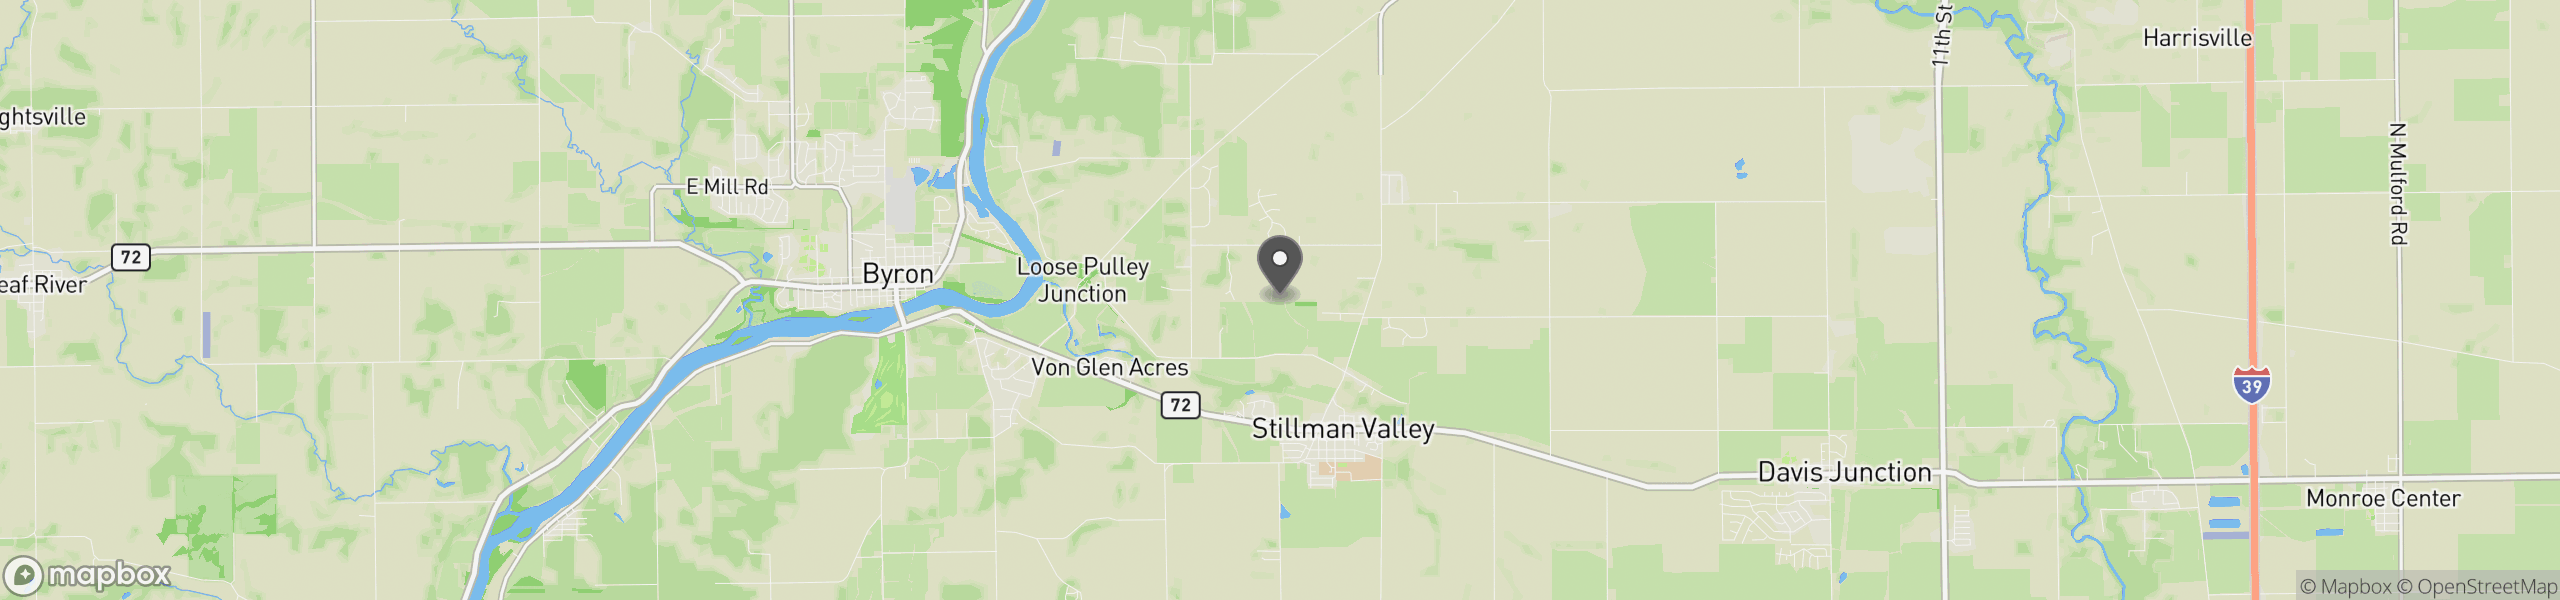 Stillman Valley, IL